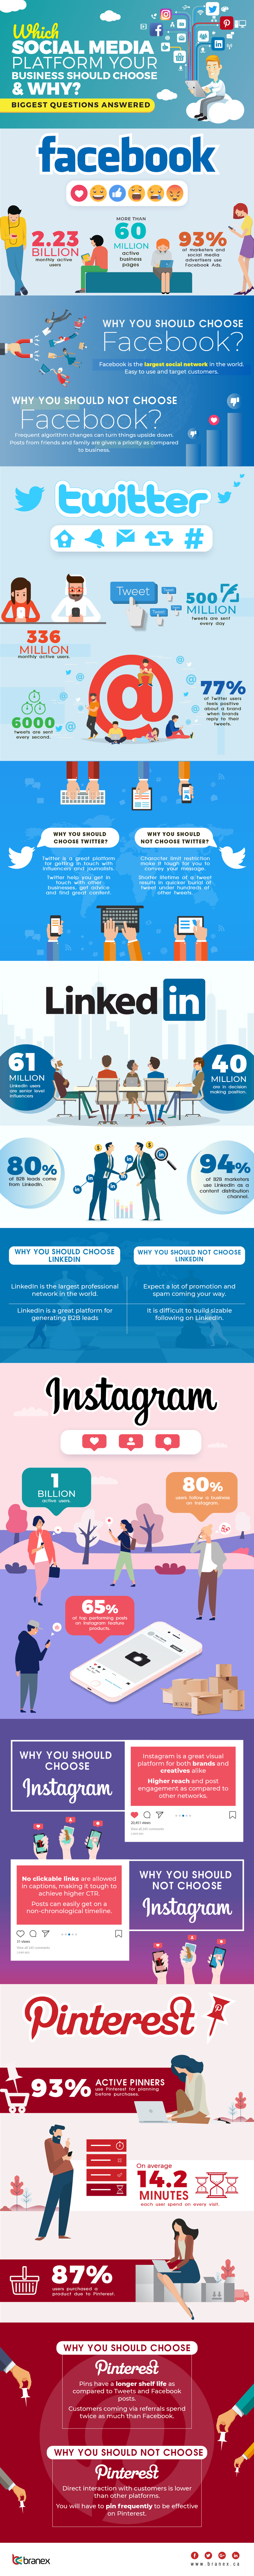 Stats And Reasons To Consider When Choosing A Social Media Platform